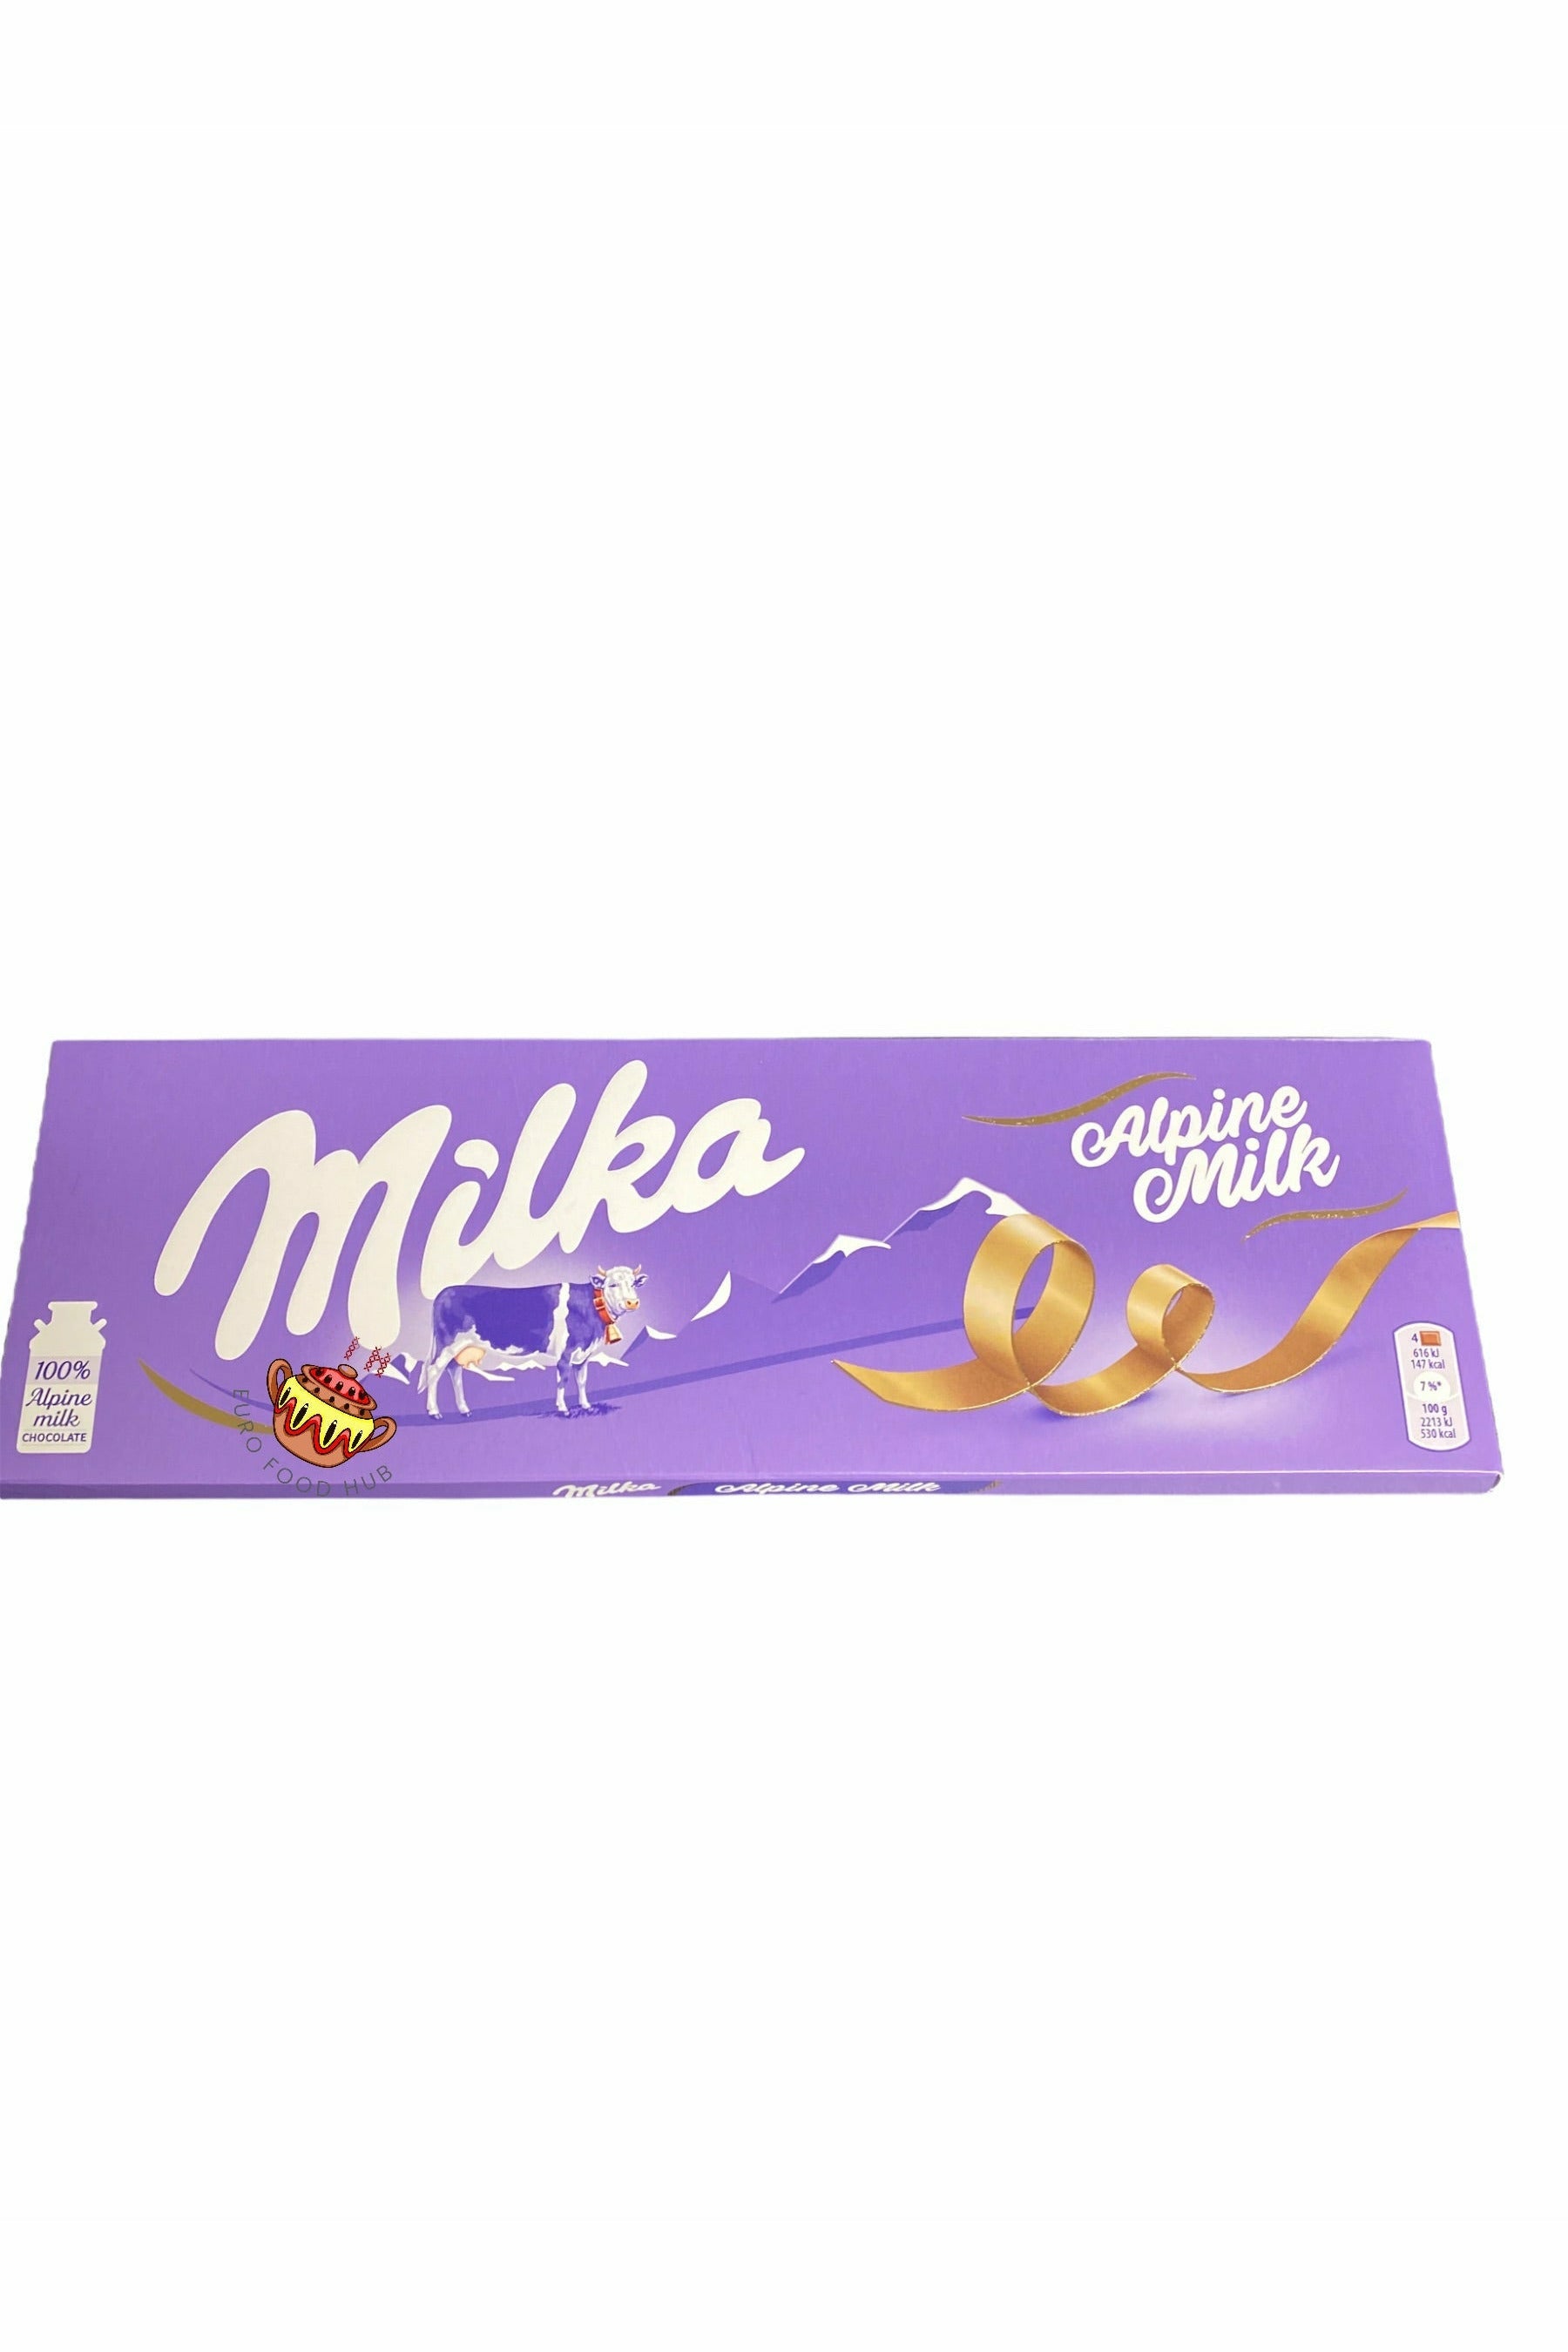 Milka Alpine Milk Chocolate, 250g